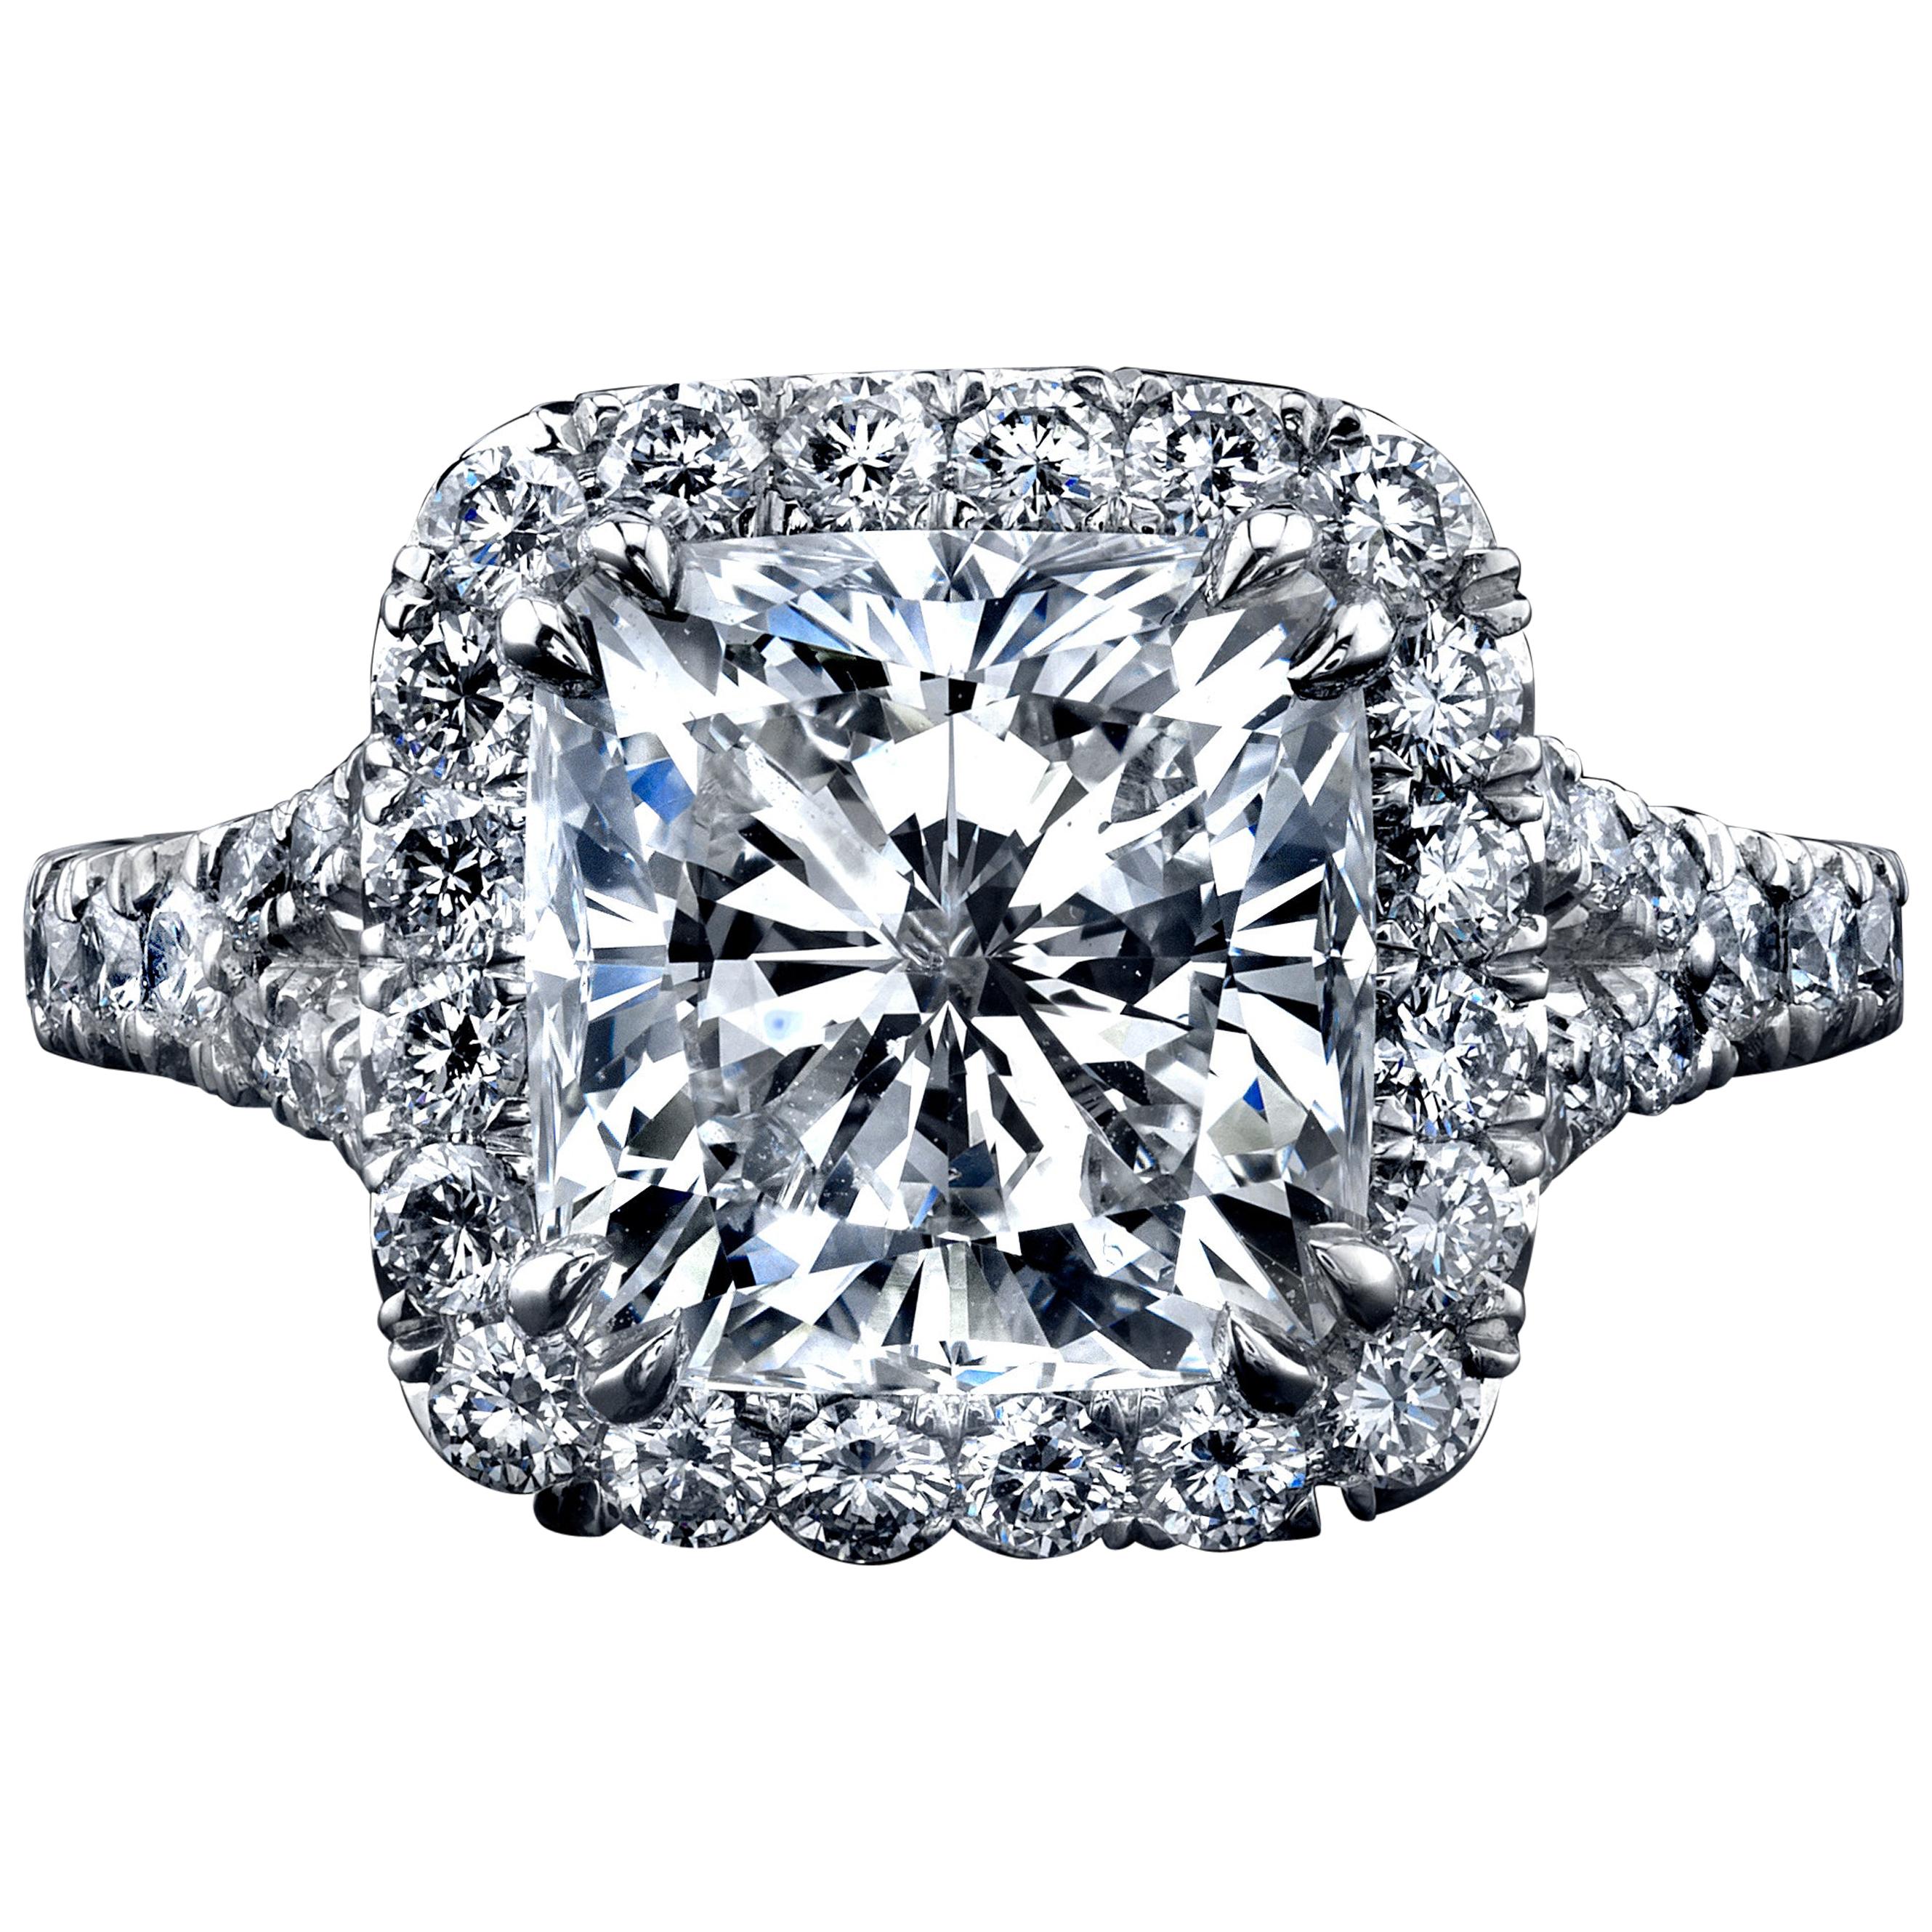 GIA Certified 4.05 Carat Cushion Cut Diamond Ring with Halo